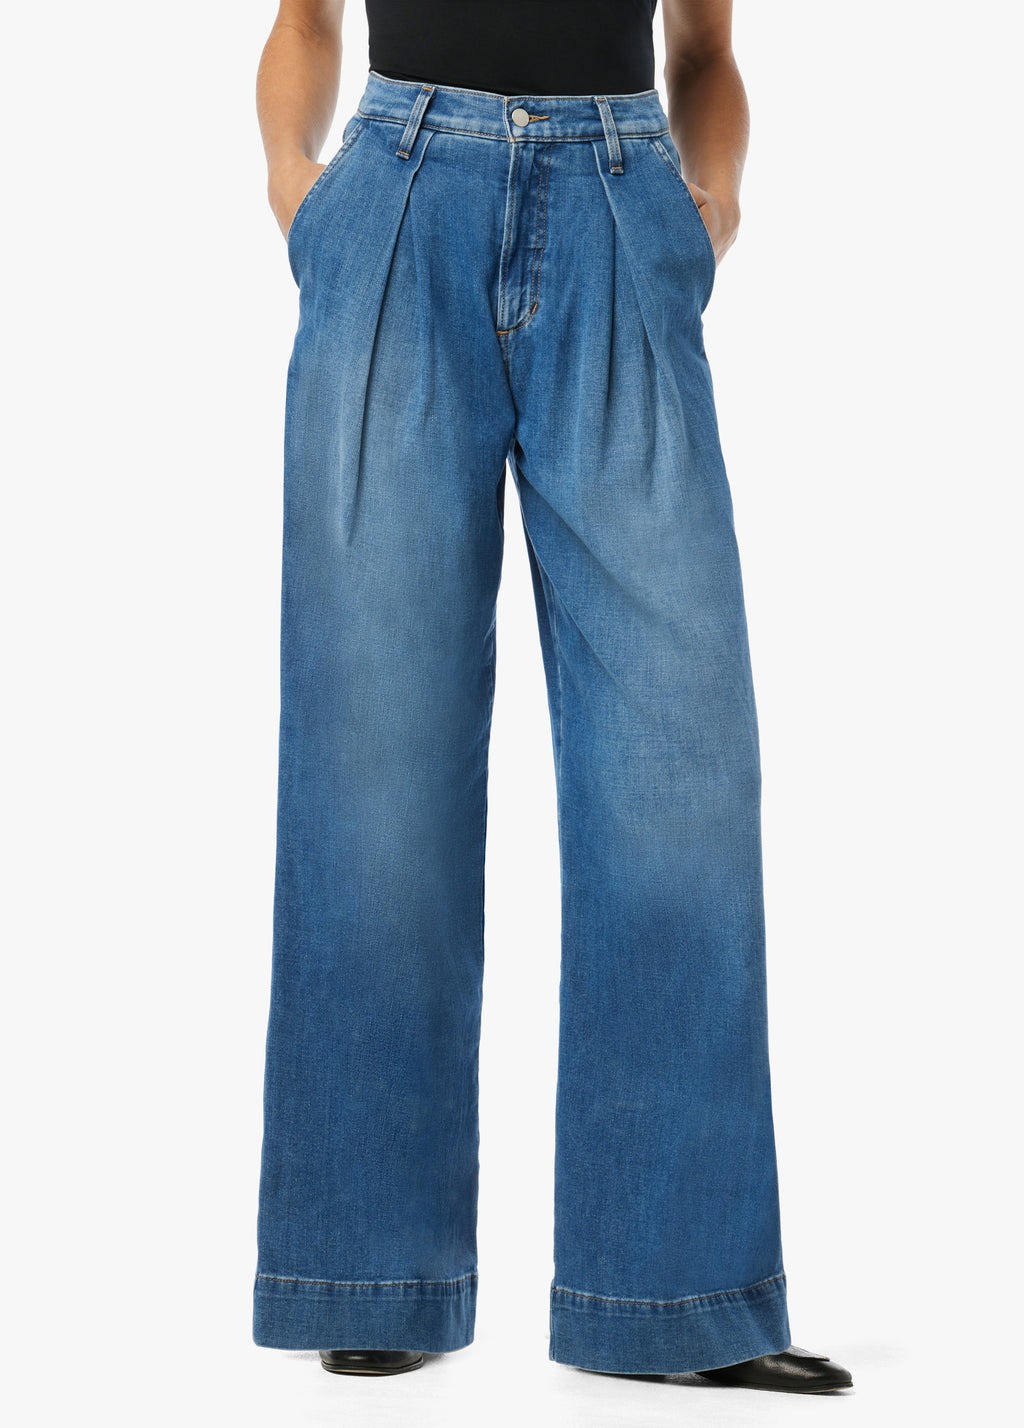 Vintage 90s Retro Hightwaisted Short Cut Capri Jeans Pants Trousres Women  Womens Ladies Size S Small Uk 10 38 